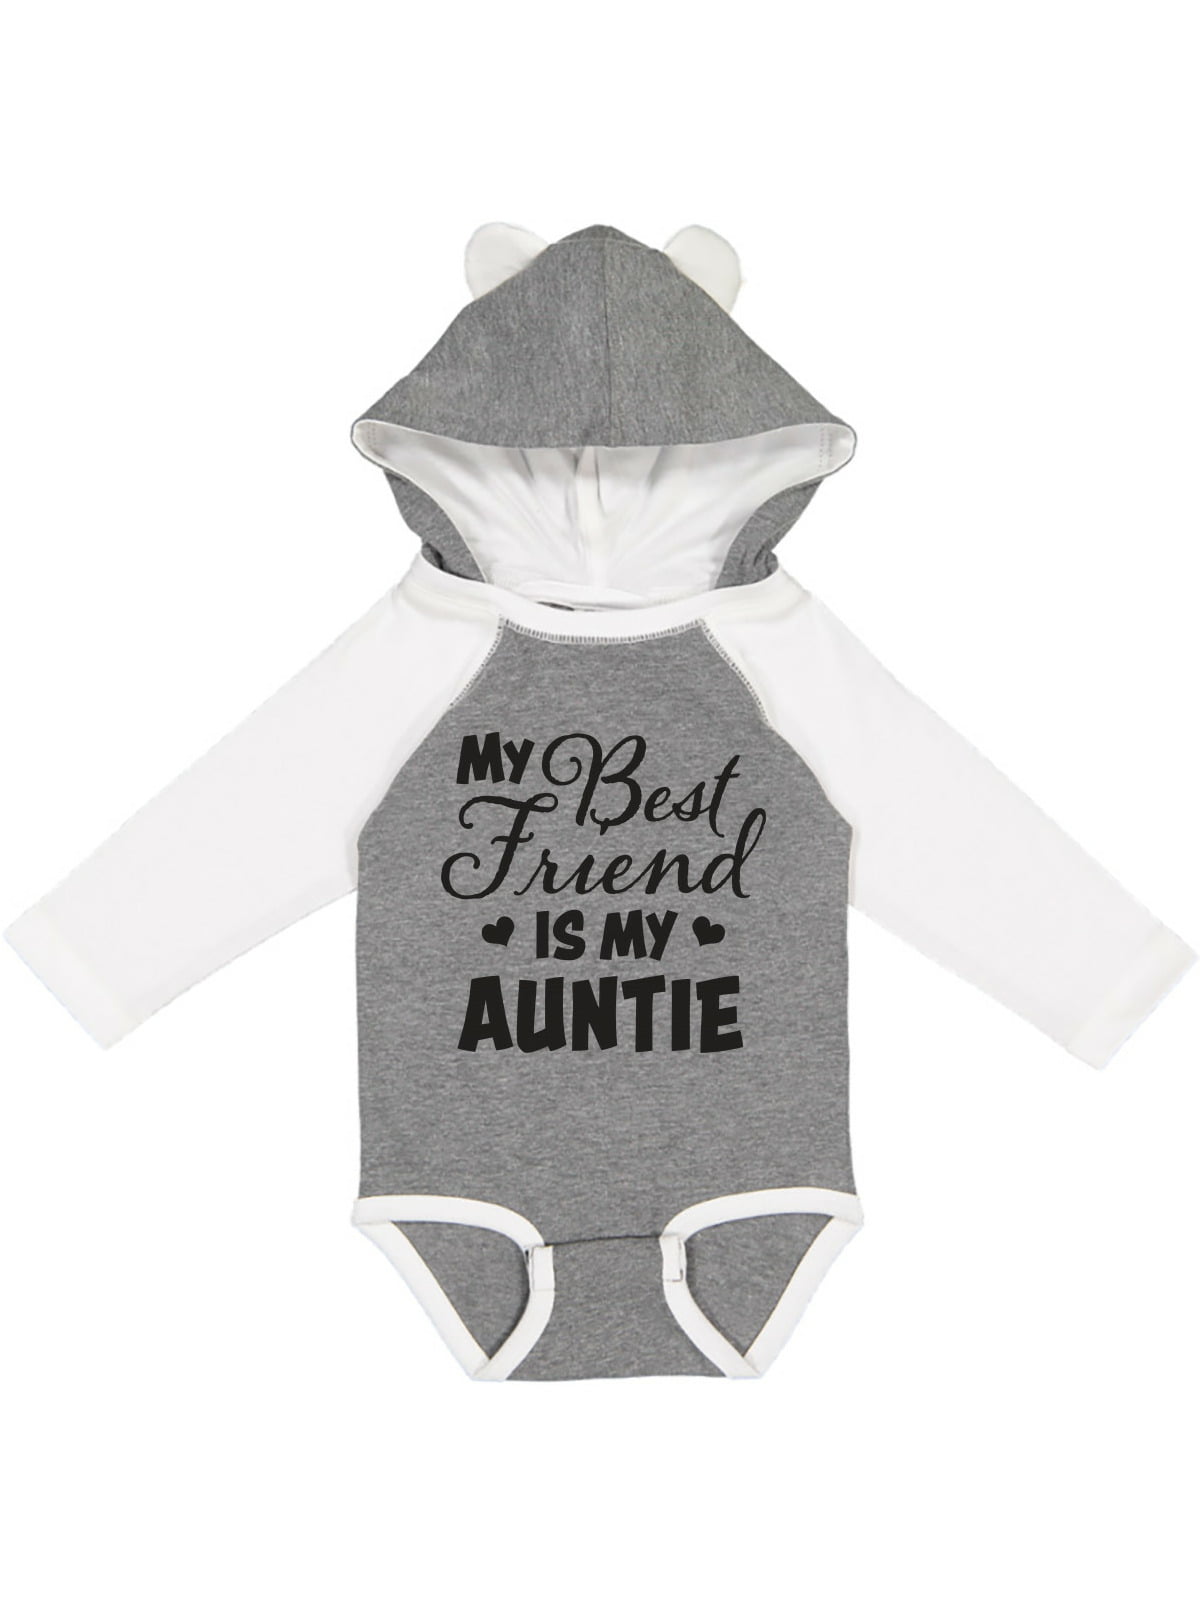 Auntie's Best Friend Design on a Gerber Onesie Fun Baby Clothes Friends TV Show 